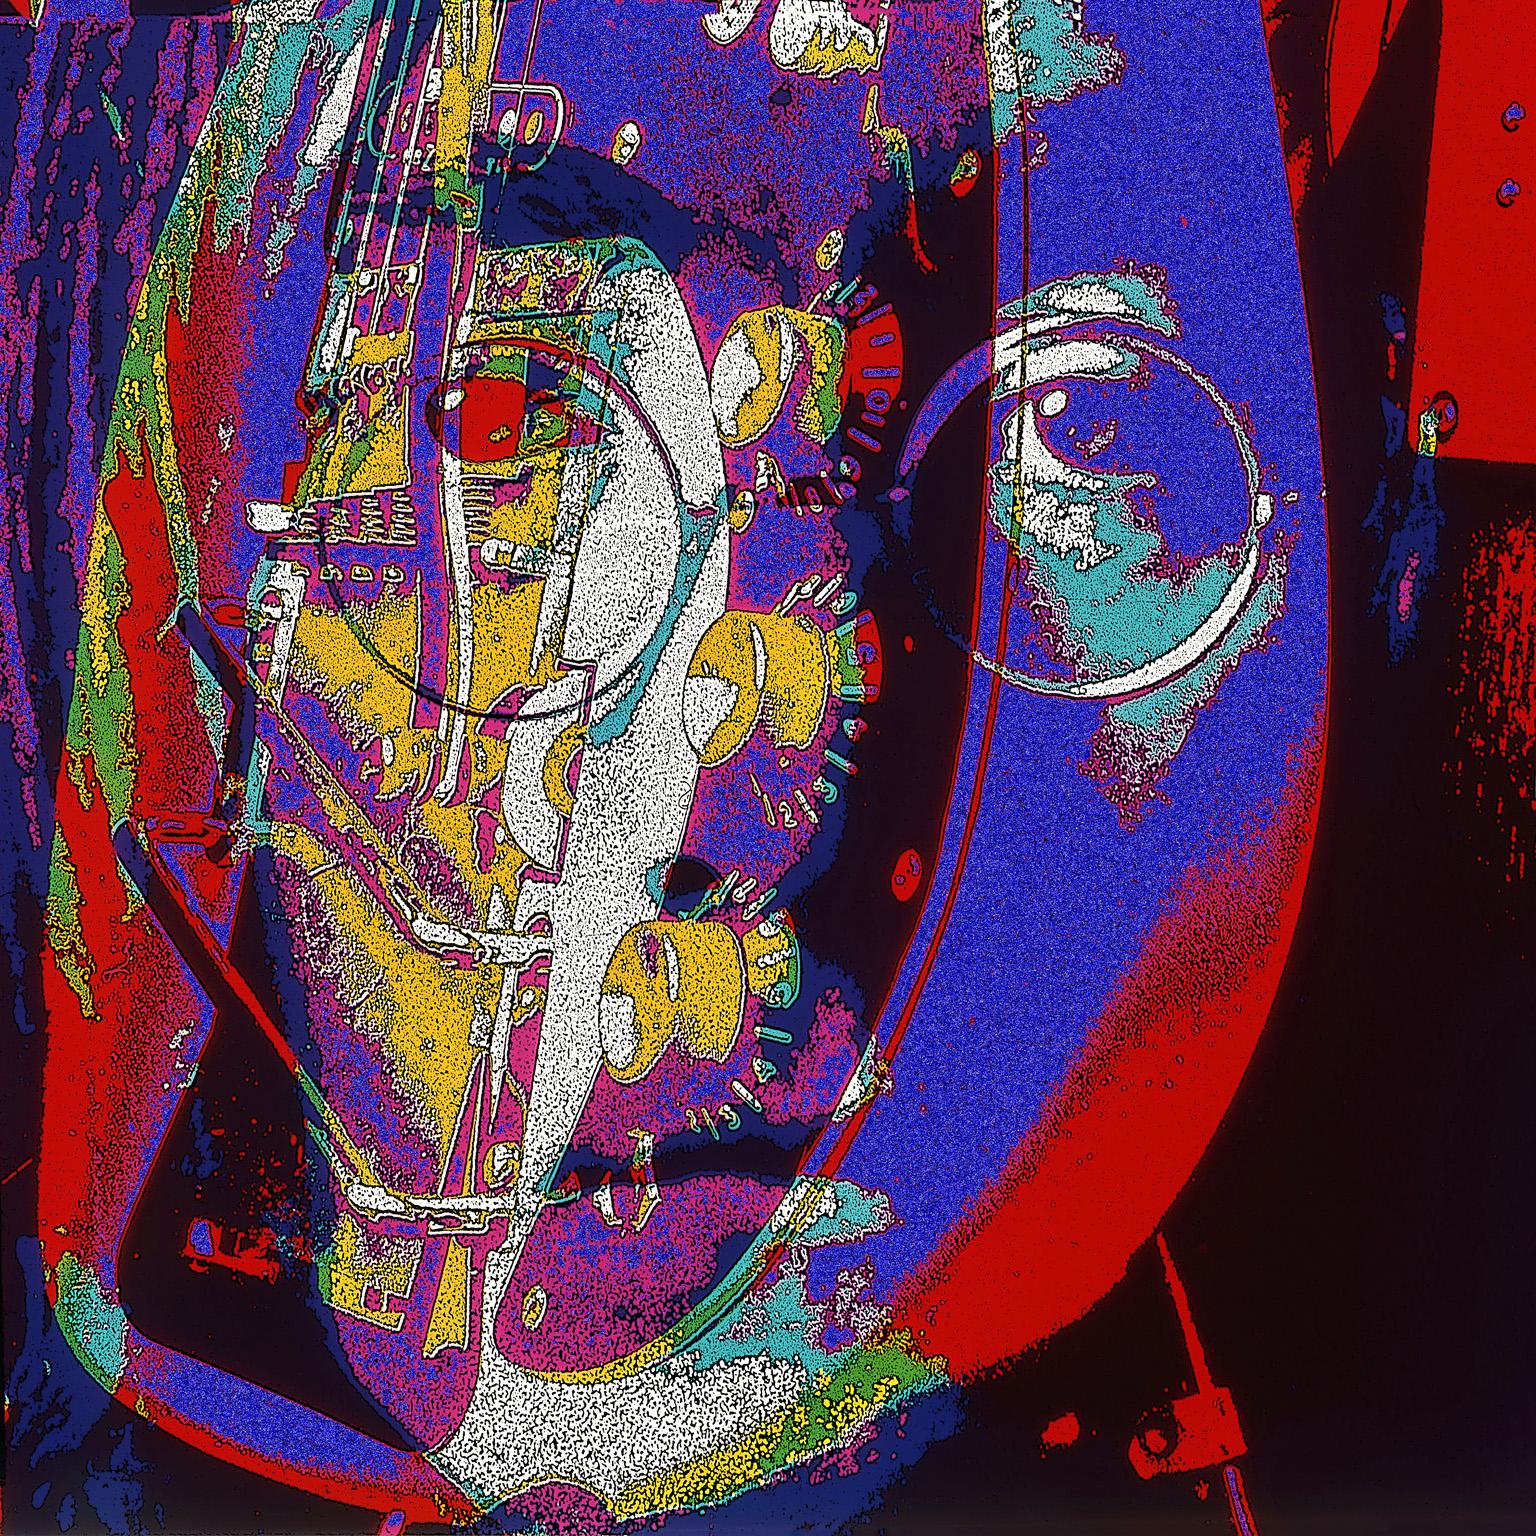 John Lennon - Beatles, Pop Art, in Rot, Lila und Gelb